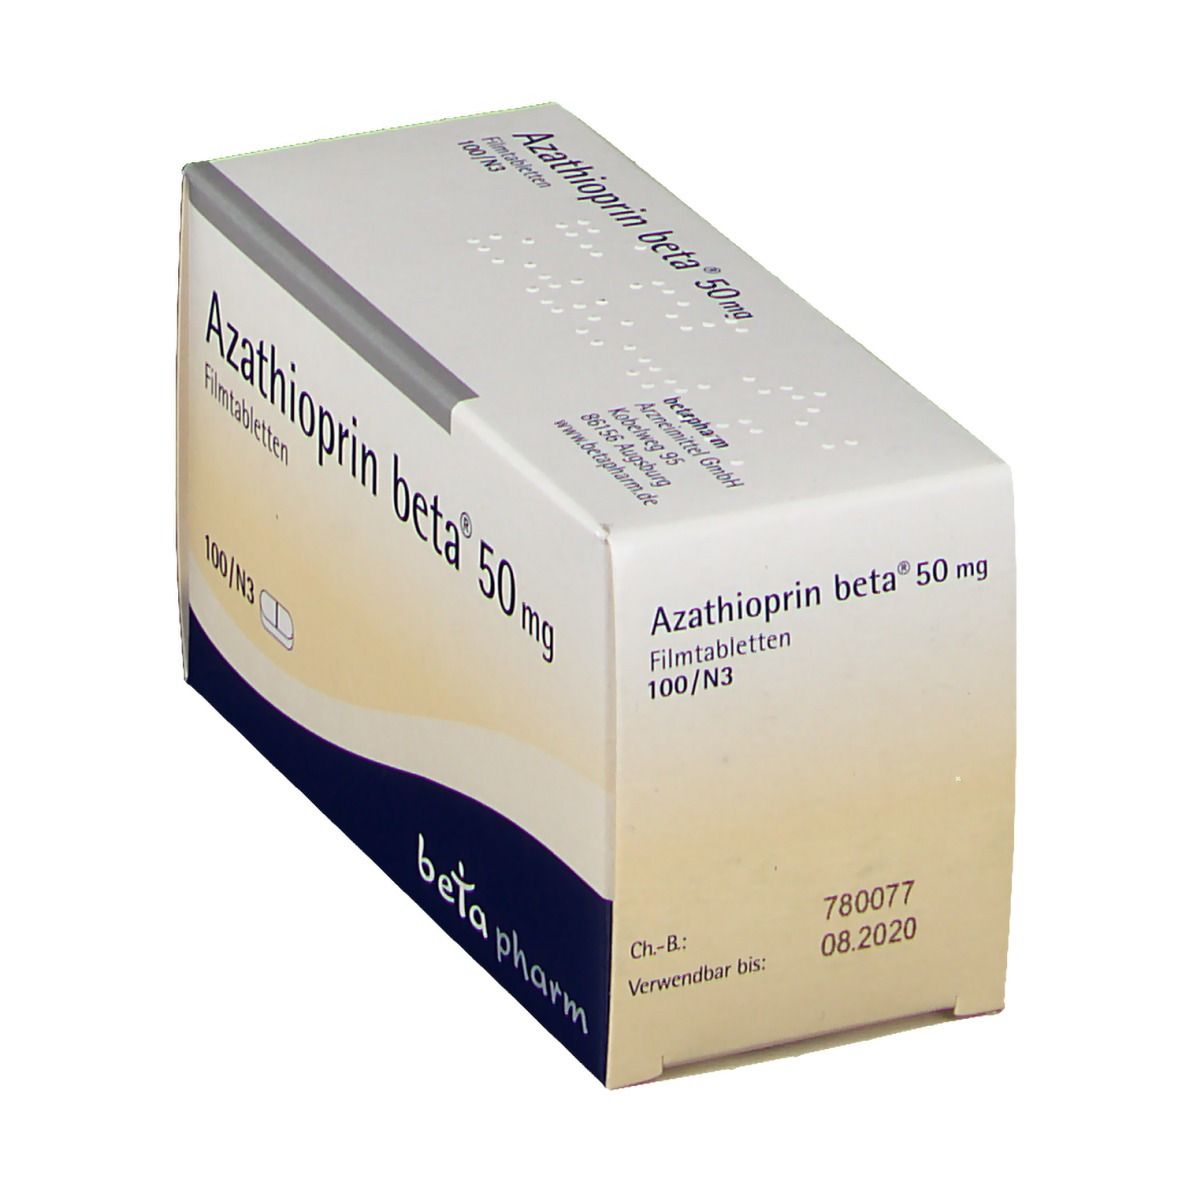 Azathioprin beta® 50 mg